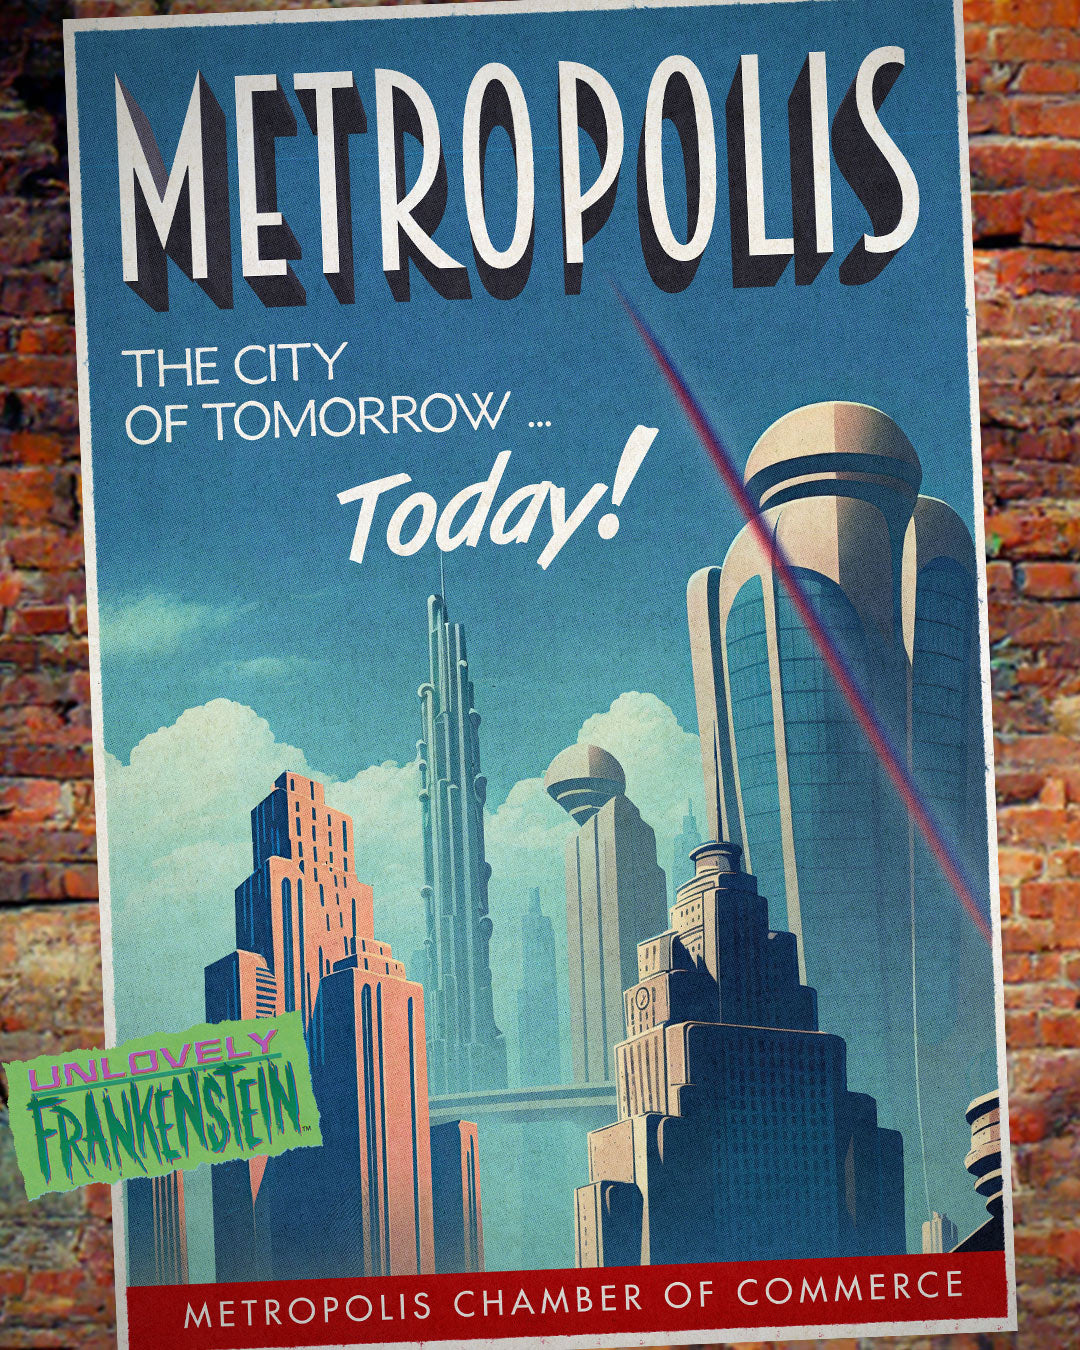 Metropolis: The City of Tomorrow | 11x17 Art Print